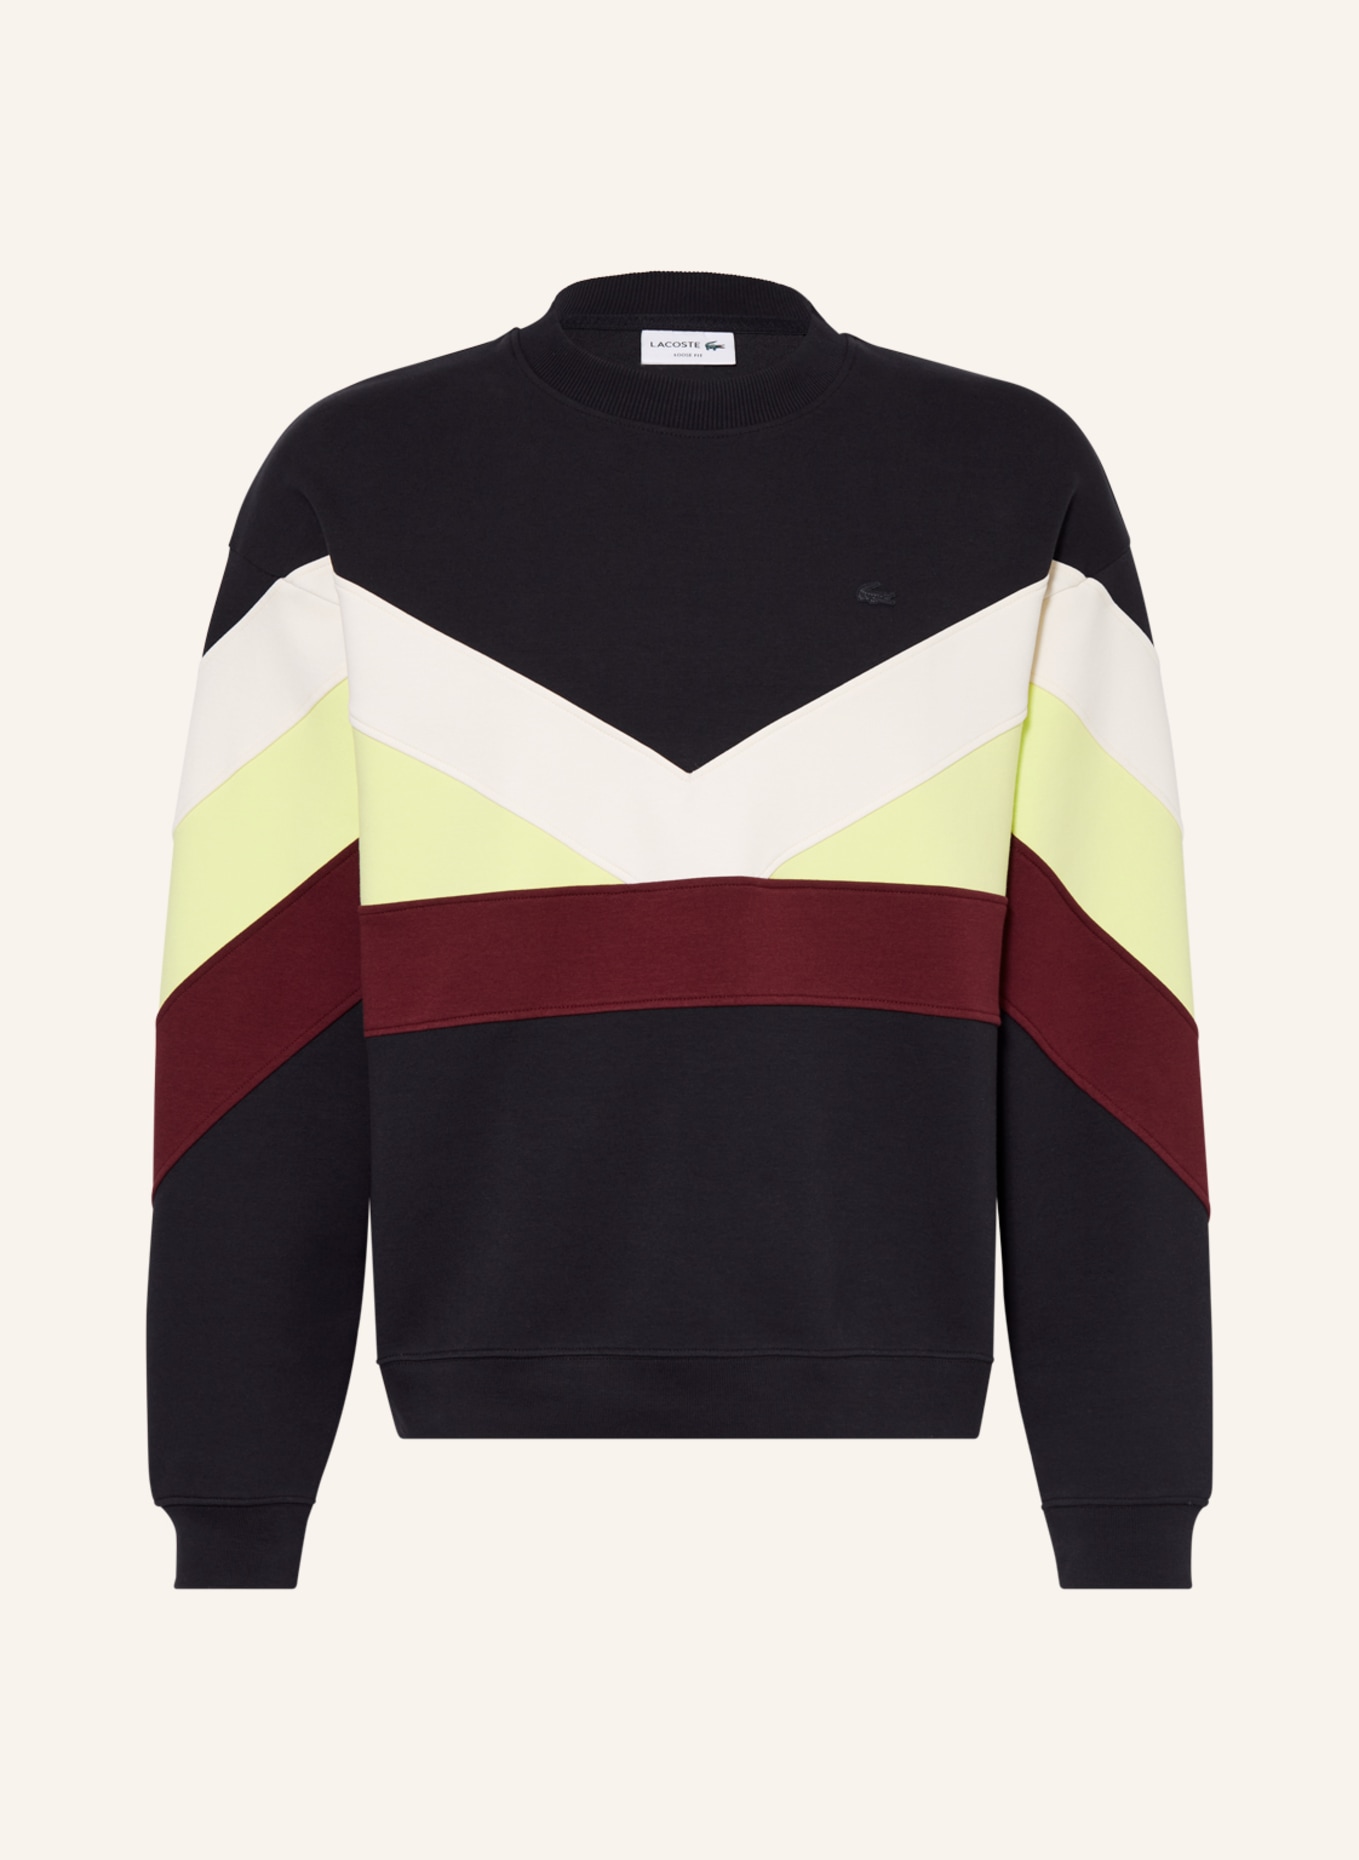 LACOSTE Sweatshirt, Farbe: DUNKELBLAU/ DUNKELROT/ NEONGELB (Bild 1)